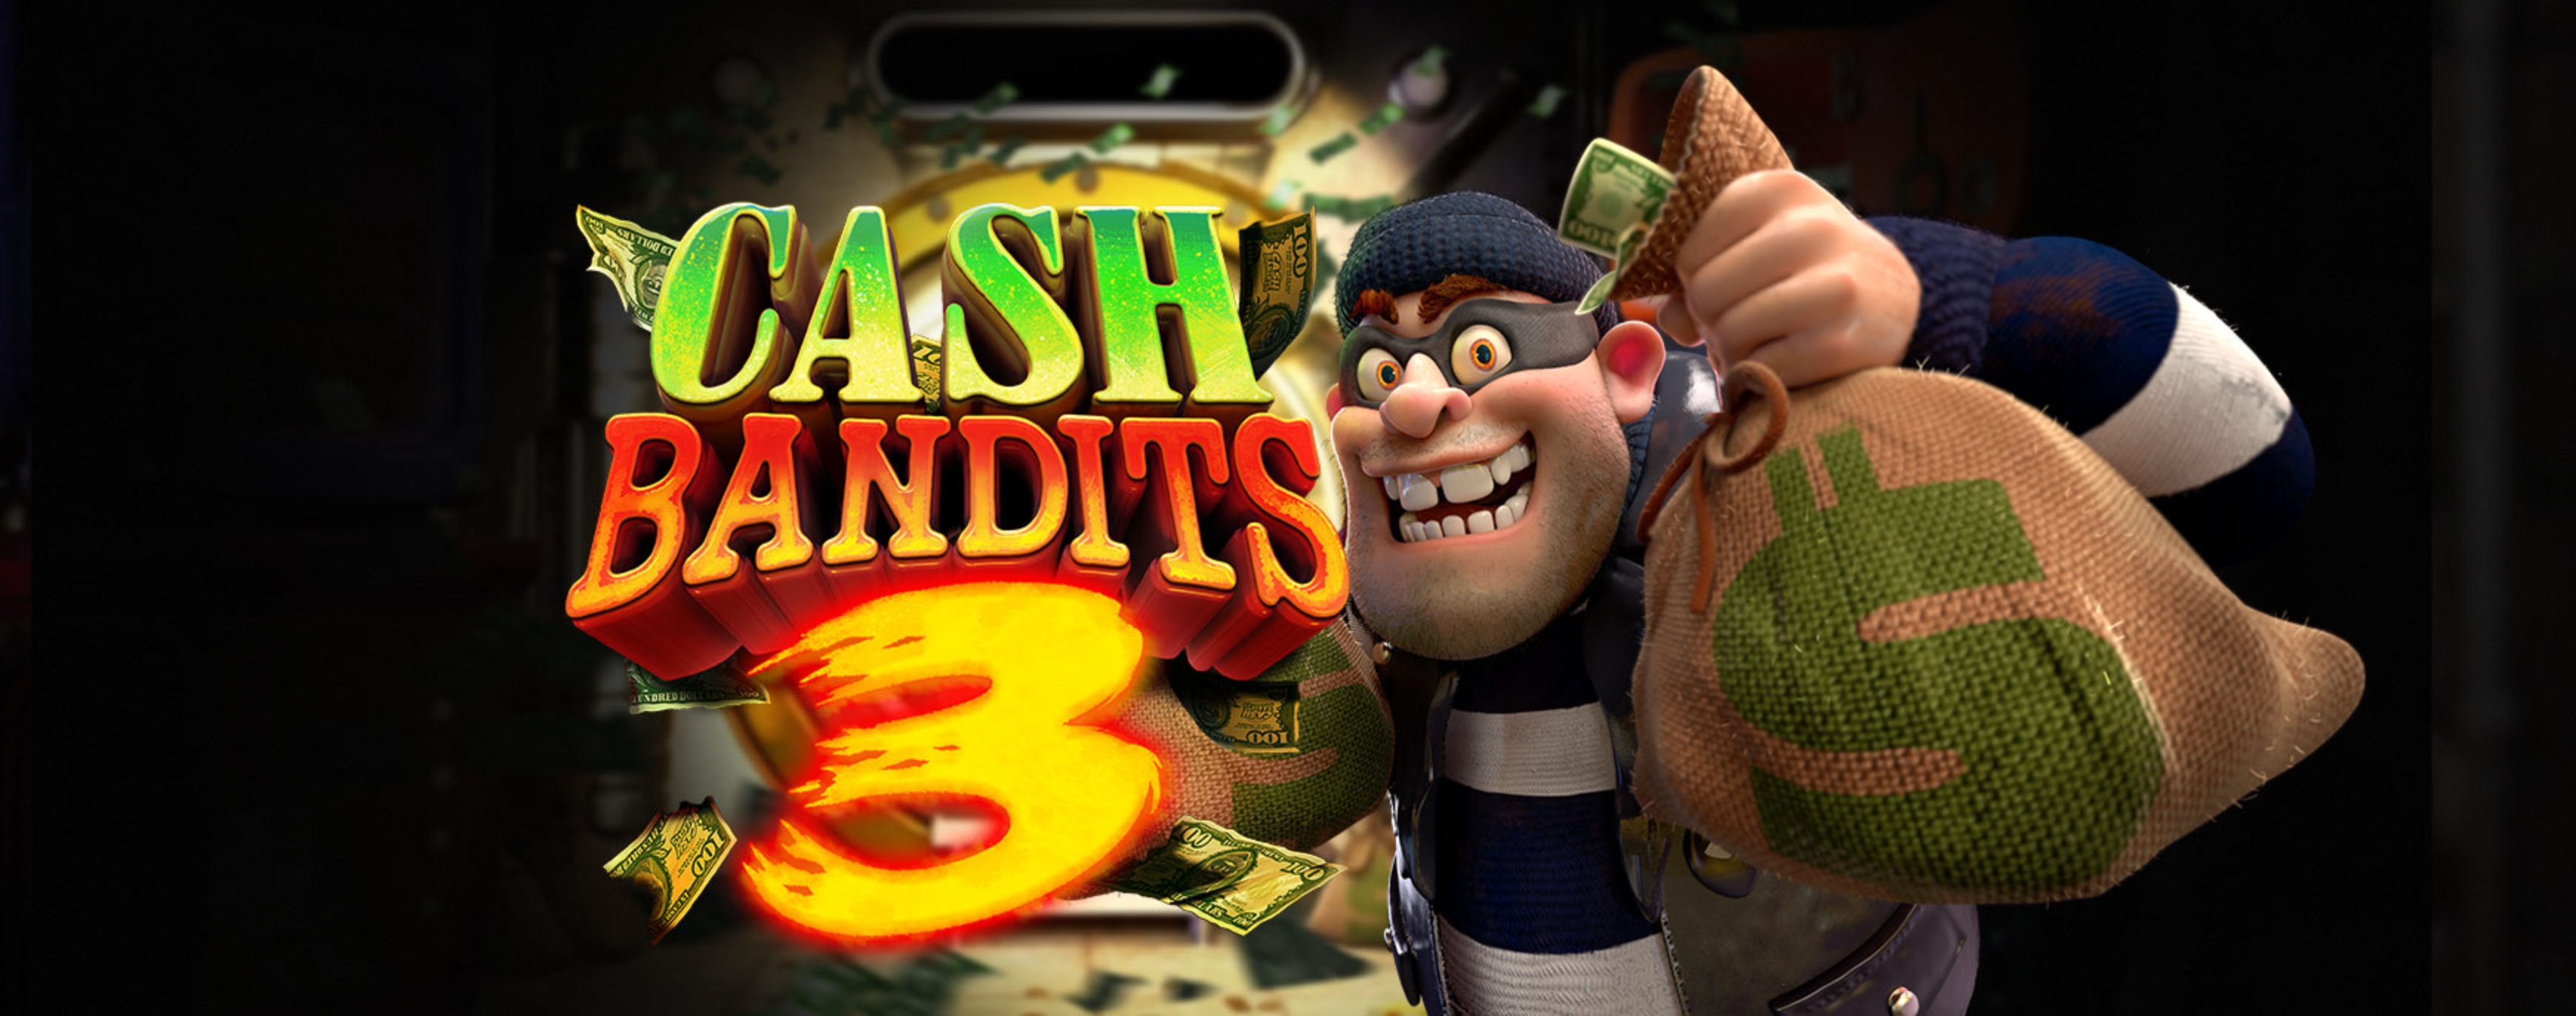 Cash Bandits 3 demo